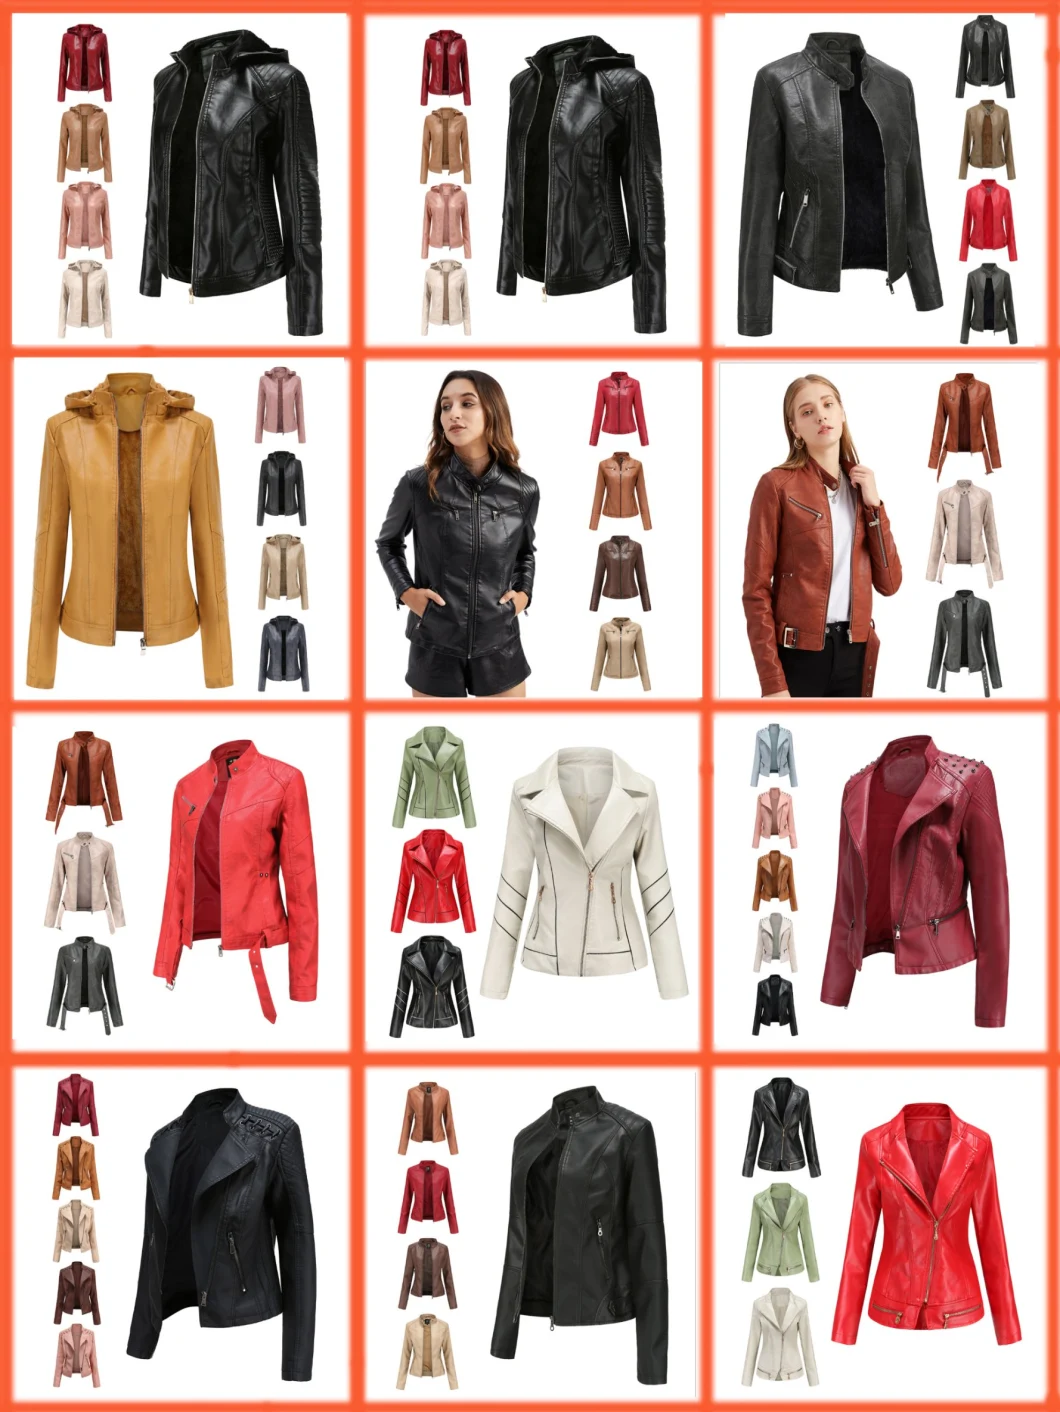 Leather Jacket for Girls Cream Leather Jacket Women′s Faux Leather Coats & Jackets Plus Size Winter Coats Outerwear Black Faux Fur Jacket